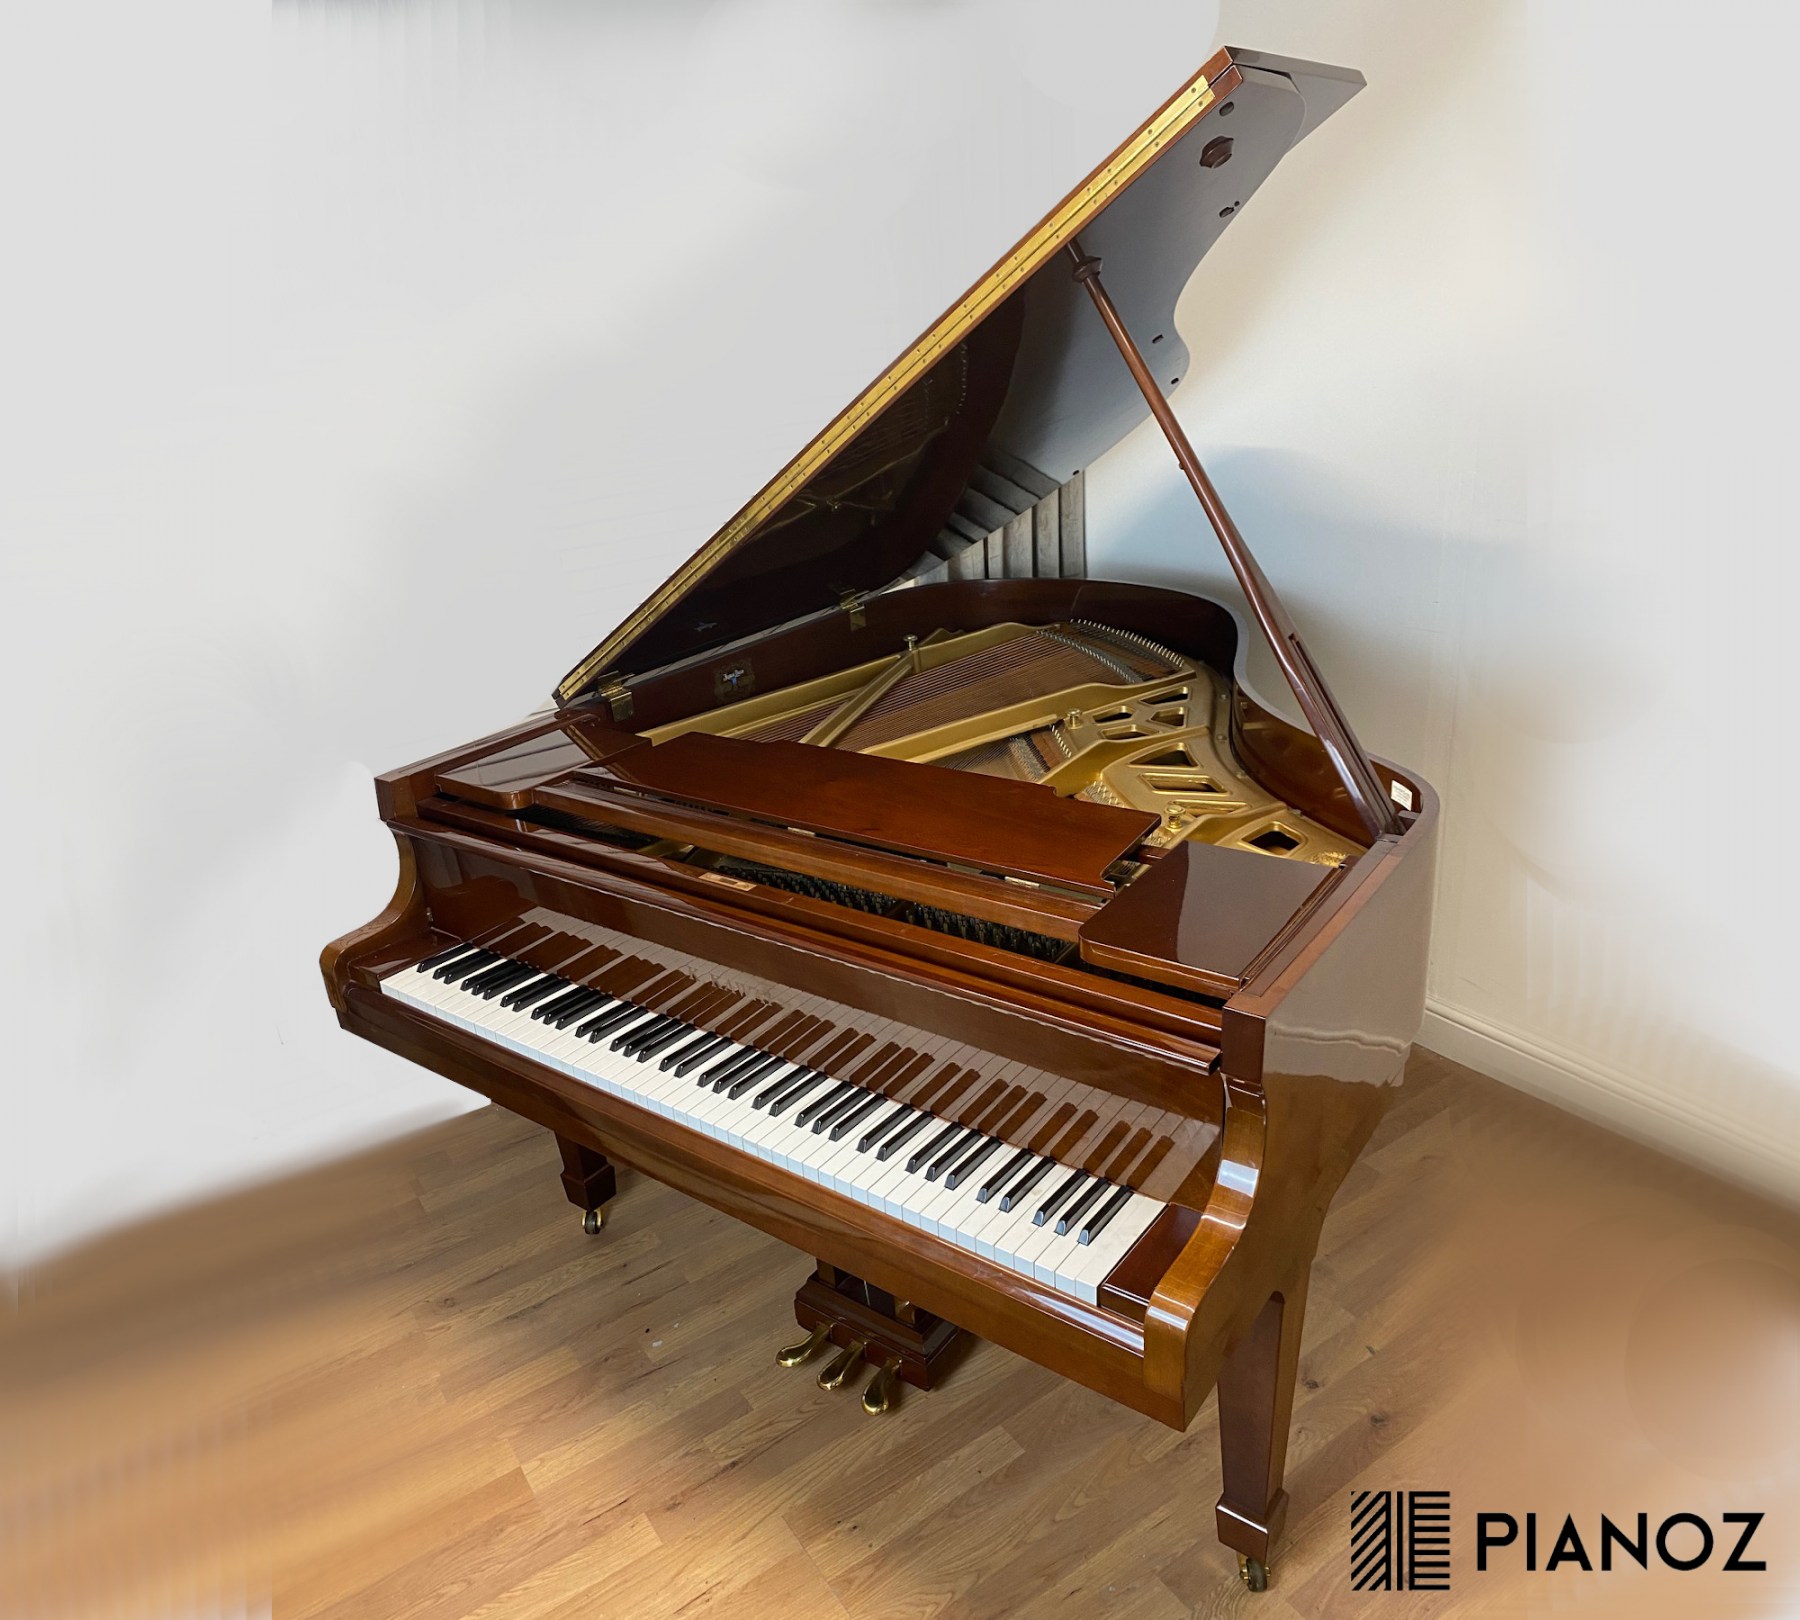 K. Kawai KG2 Grand Piano piano for sale in UK